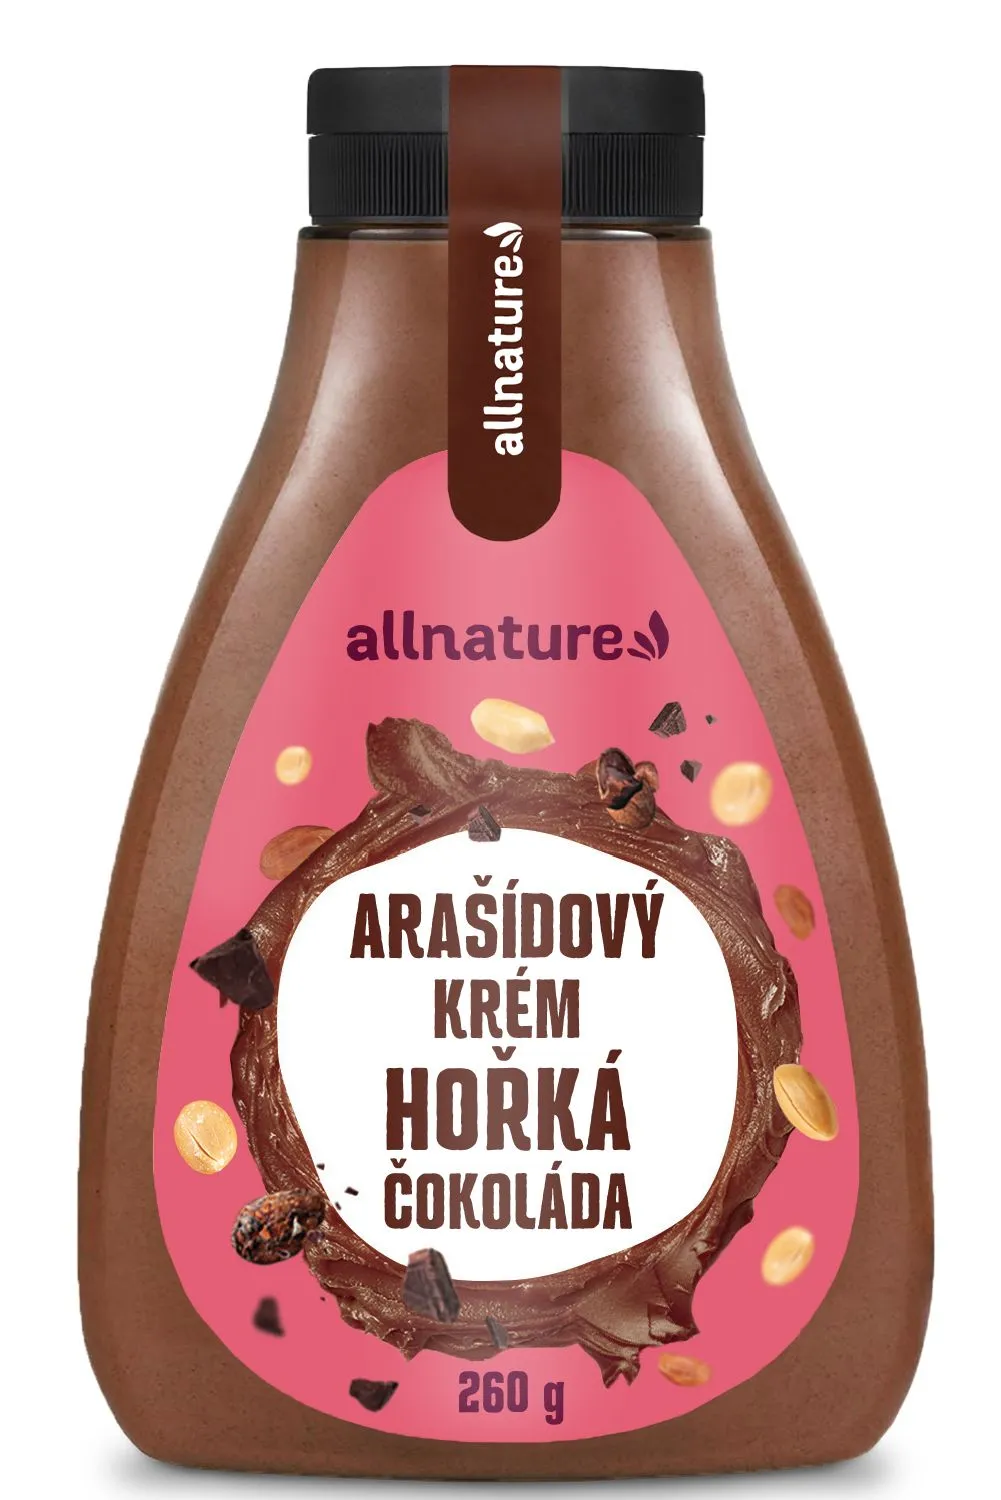 Allnature Arasidovy Krem S Horkou Cokoladou 260g